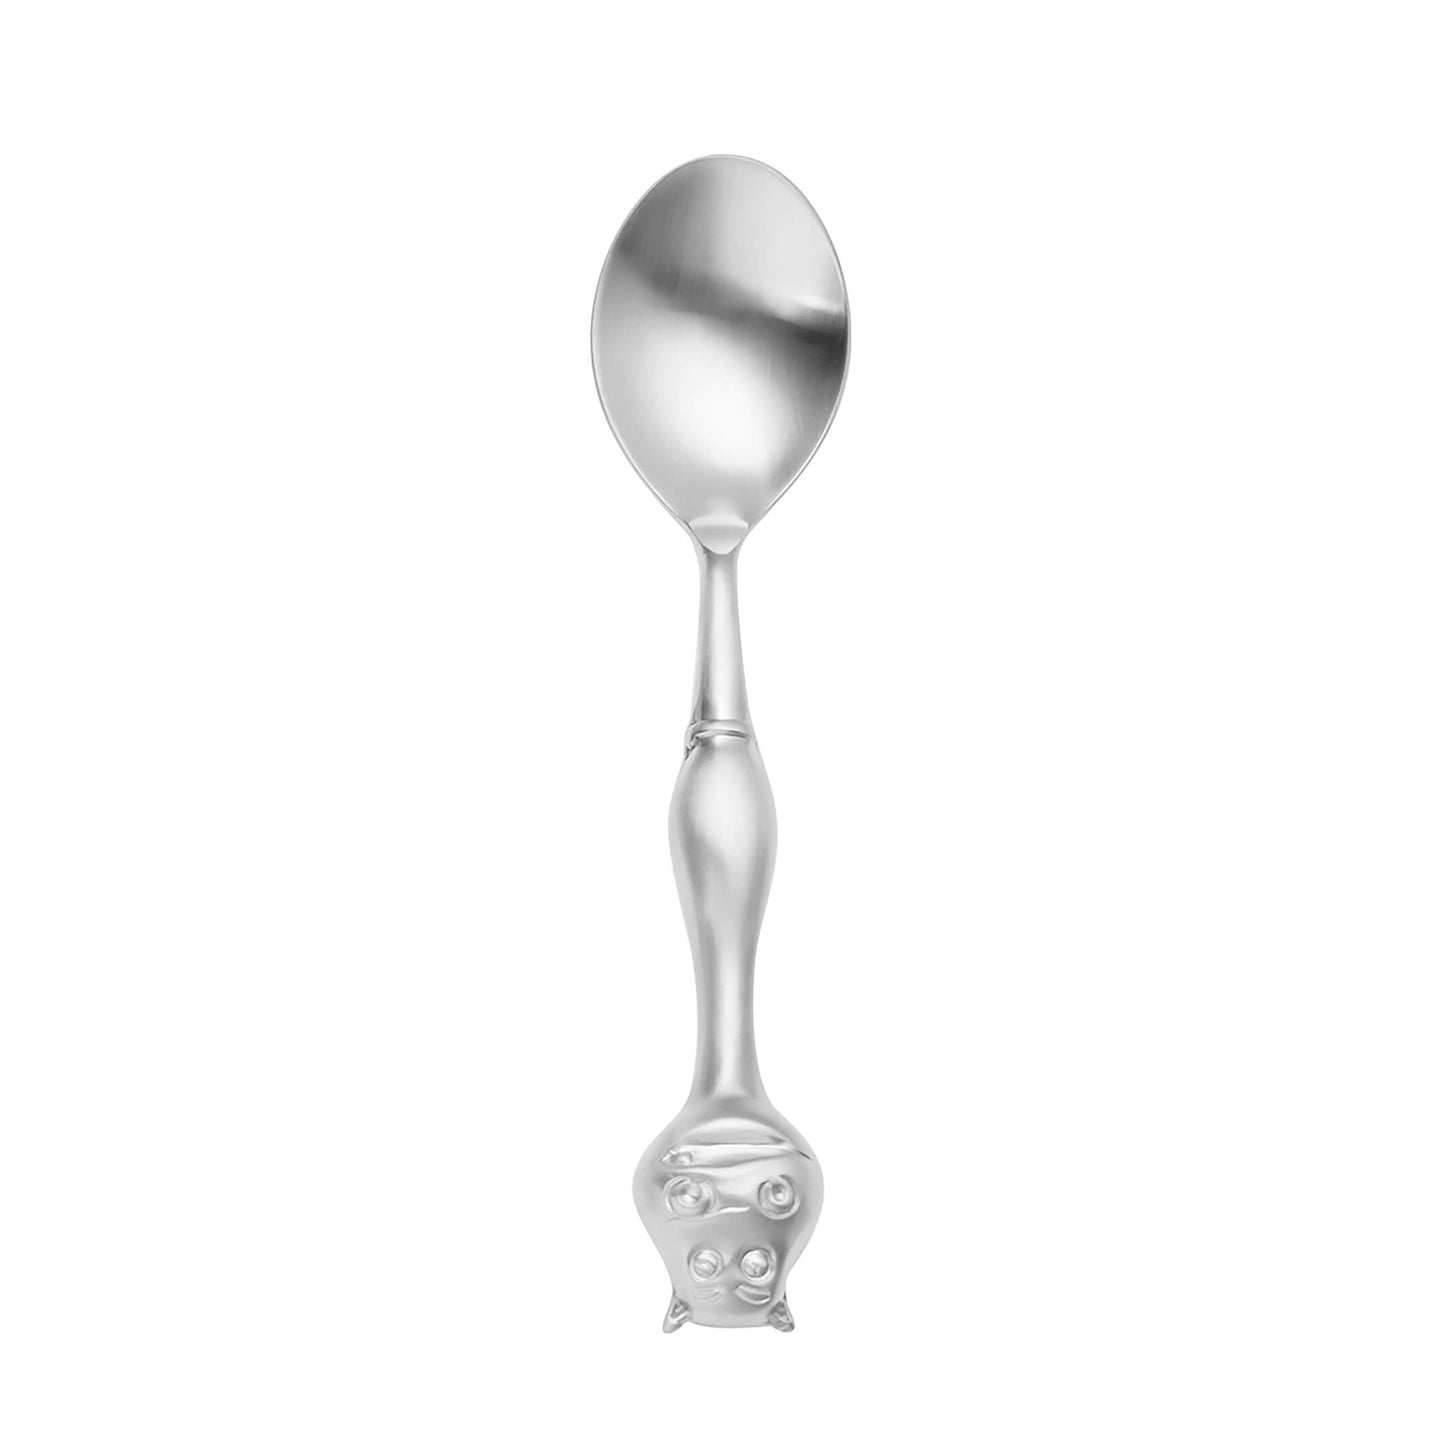 Madagascar premium quality stainless steel children spoon